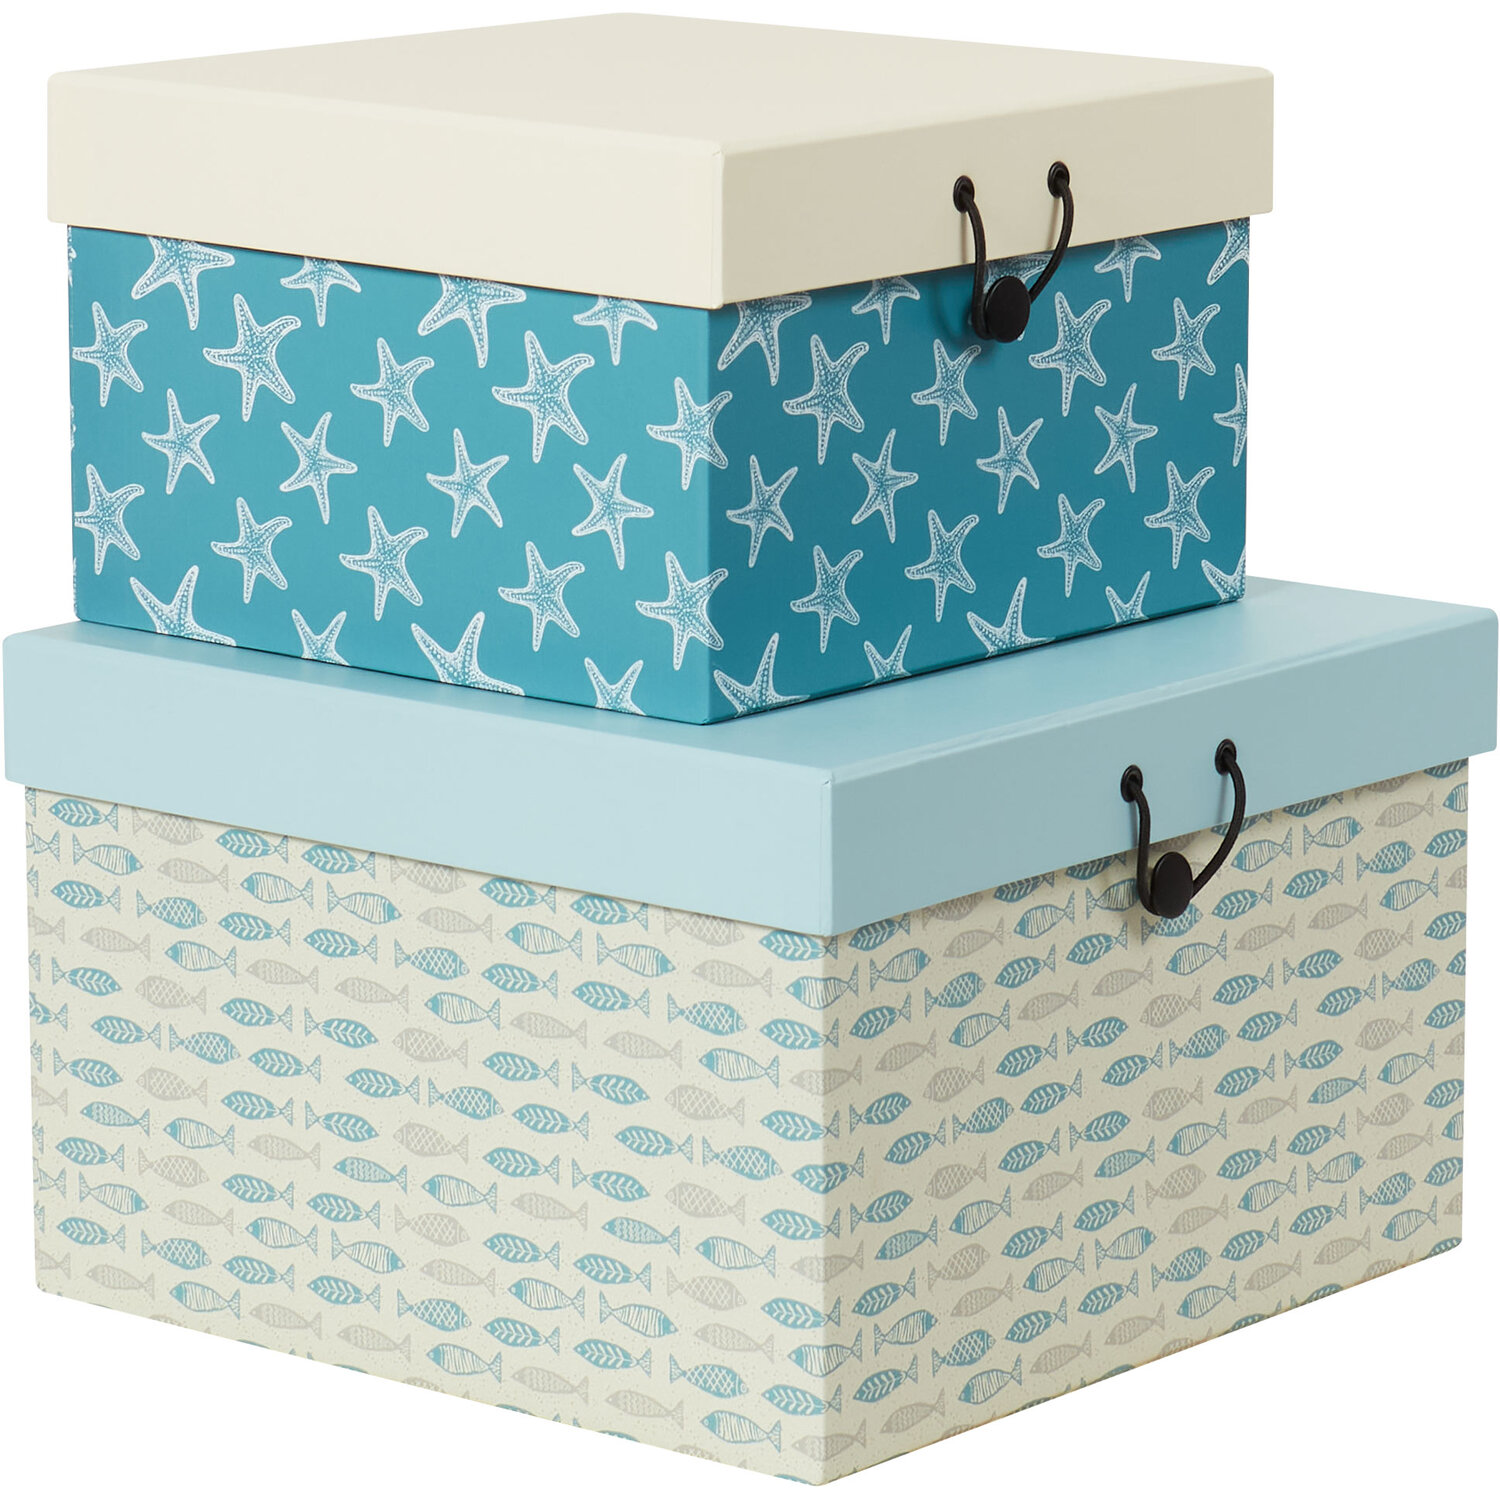 Set of 3 Coastal Print Boxes - Blue Image 2